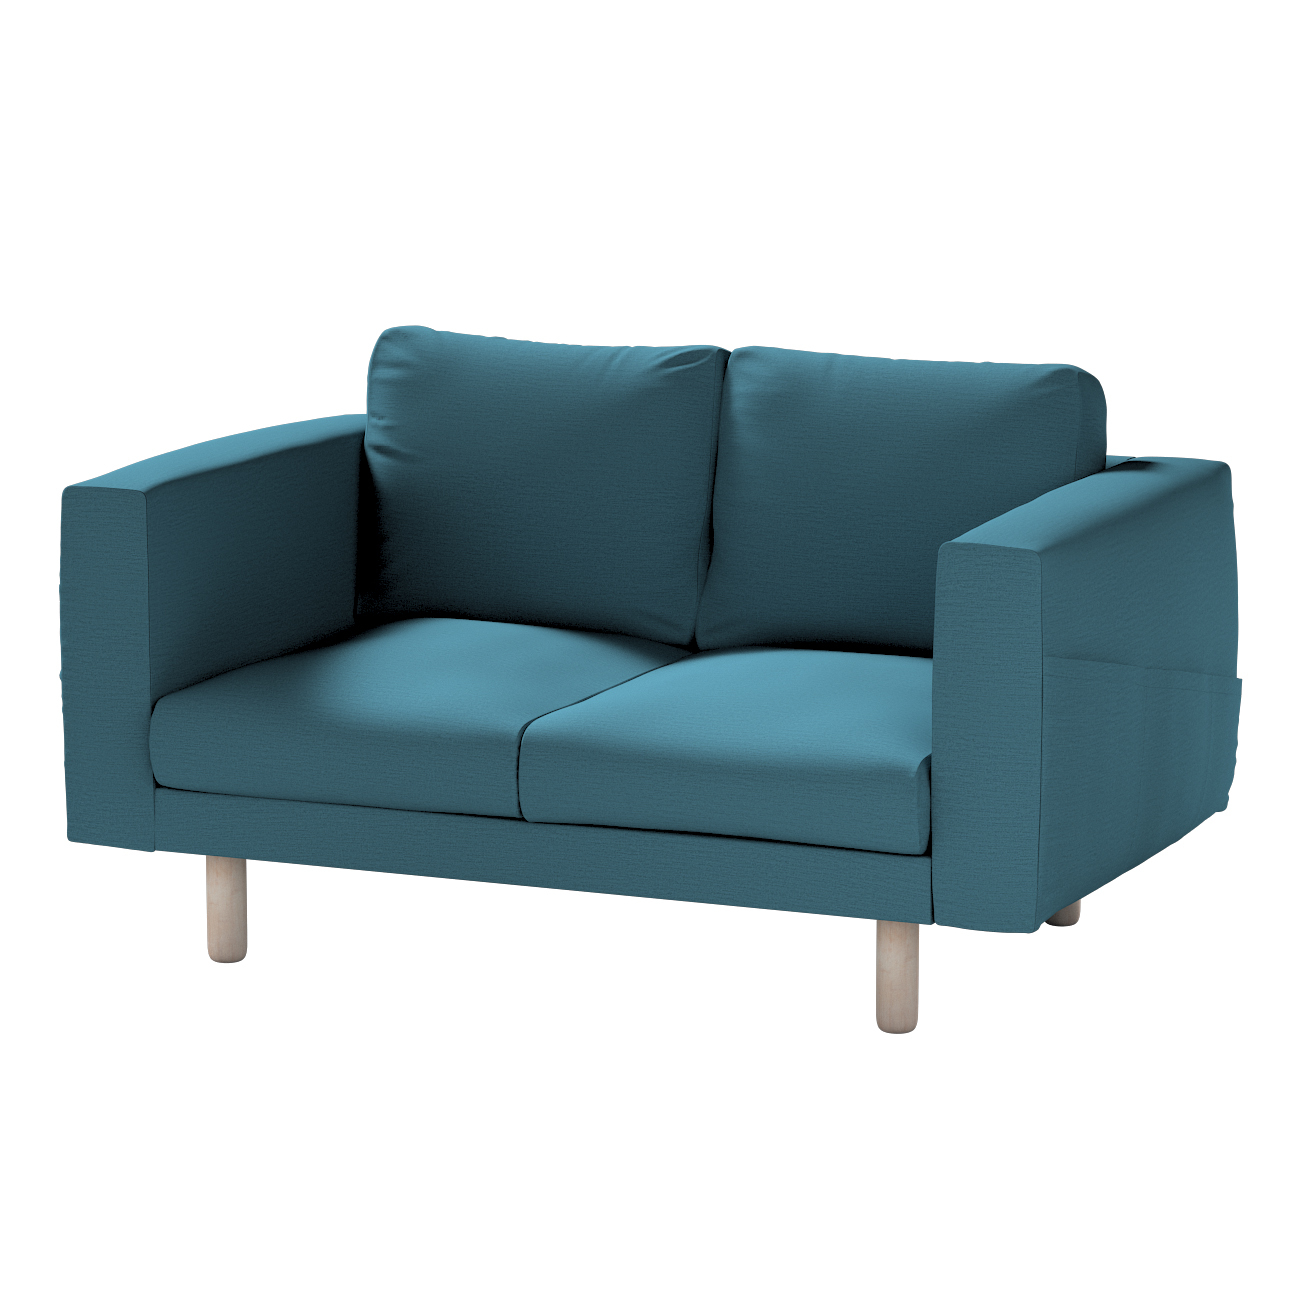 Bezug für Norsborg 2-Sitzer Sofa, dunkelblau, Norsborg 2-Sitzer Sofabezug, günstig online kaufen